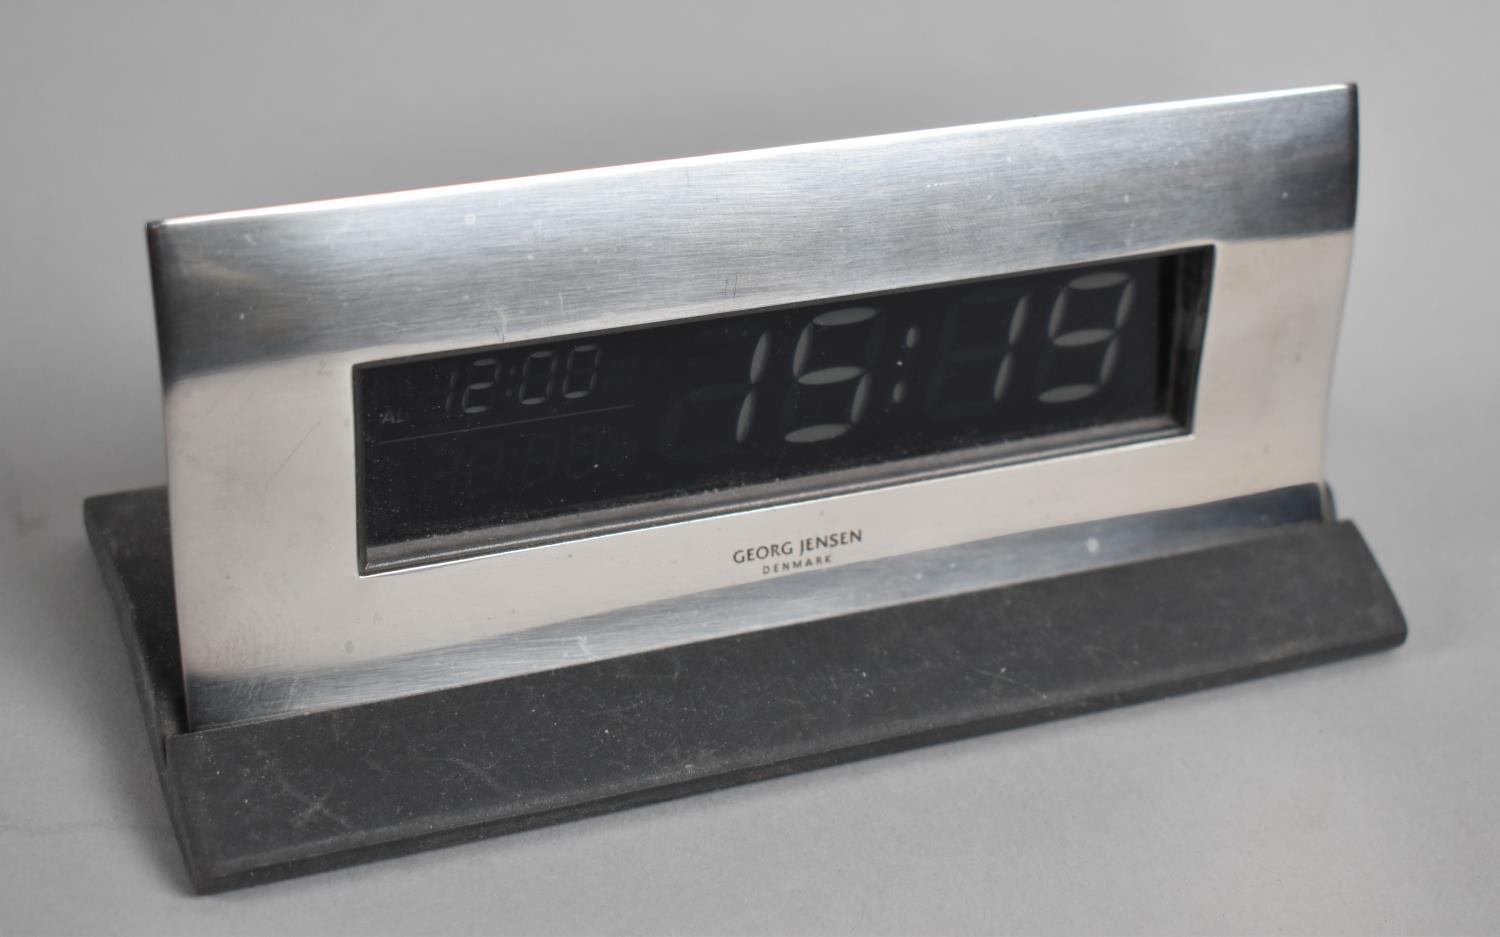 A Modern Desktop Digital Clock by Georg Jensen, 16cms Wide